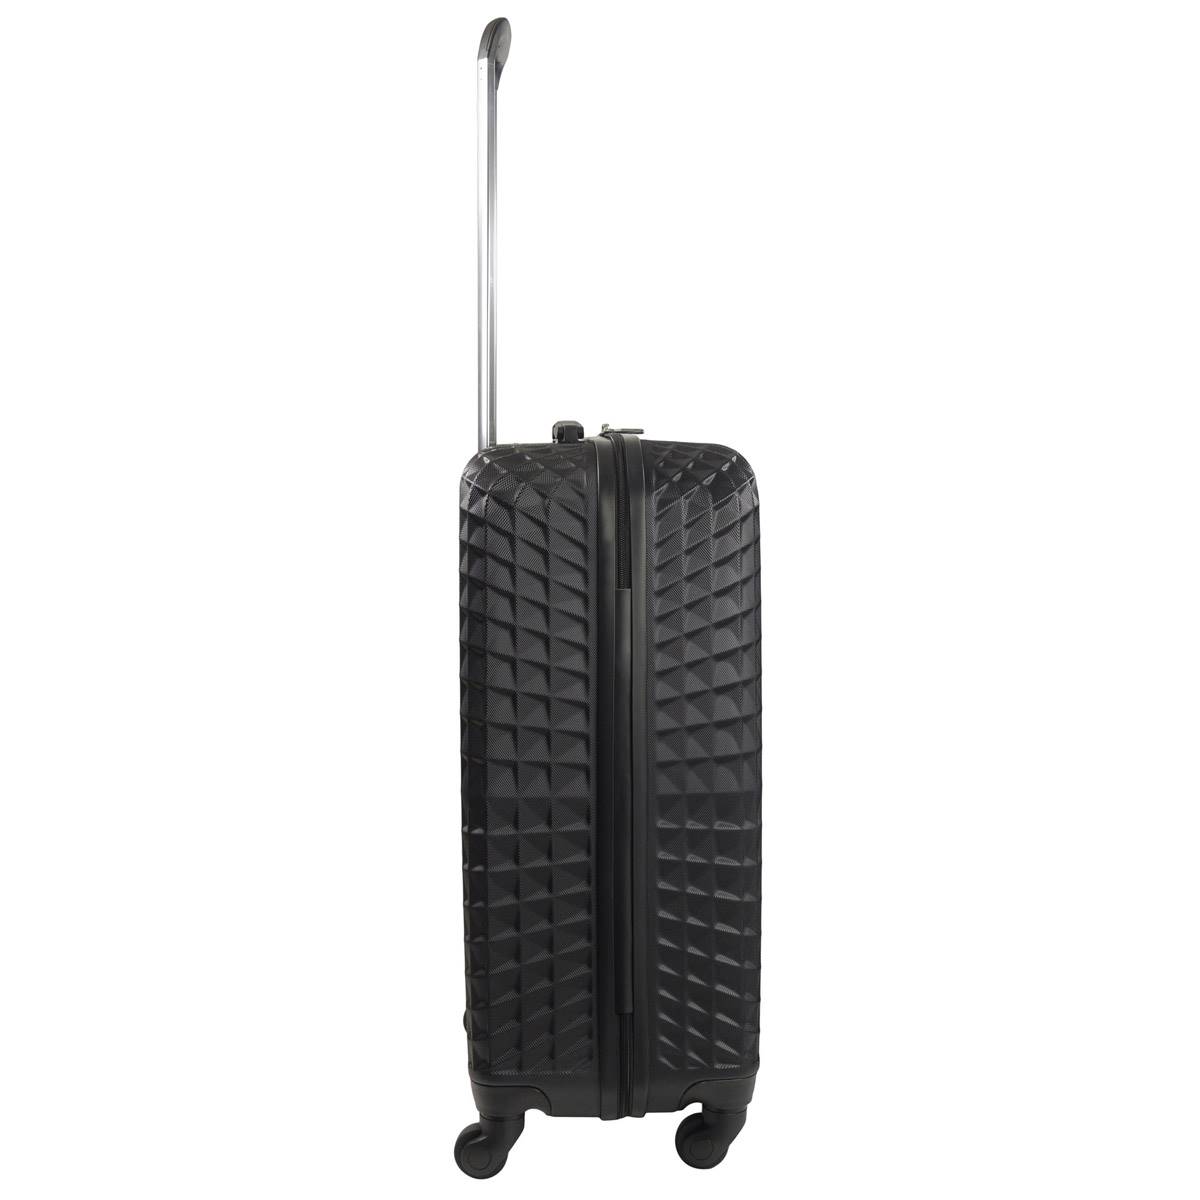 FUL 26in. Geometric Hardside Spinner Luggage